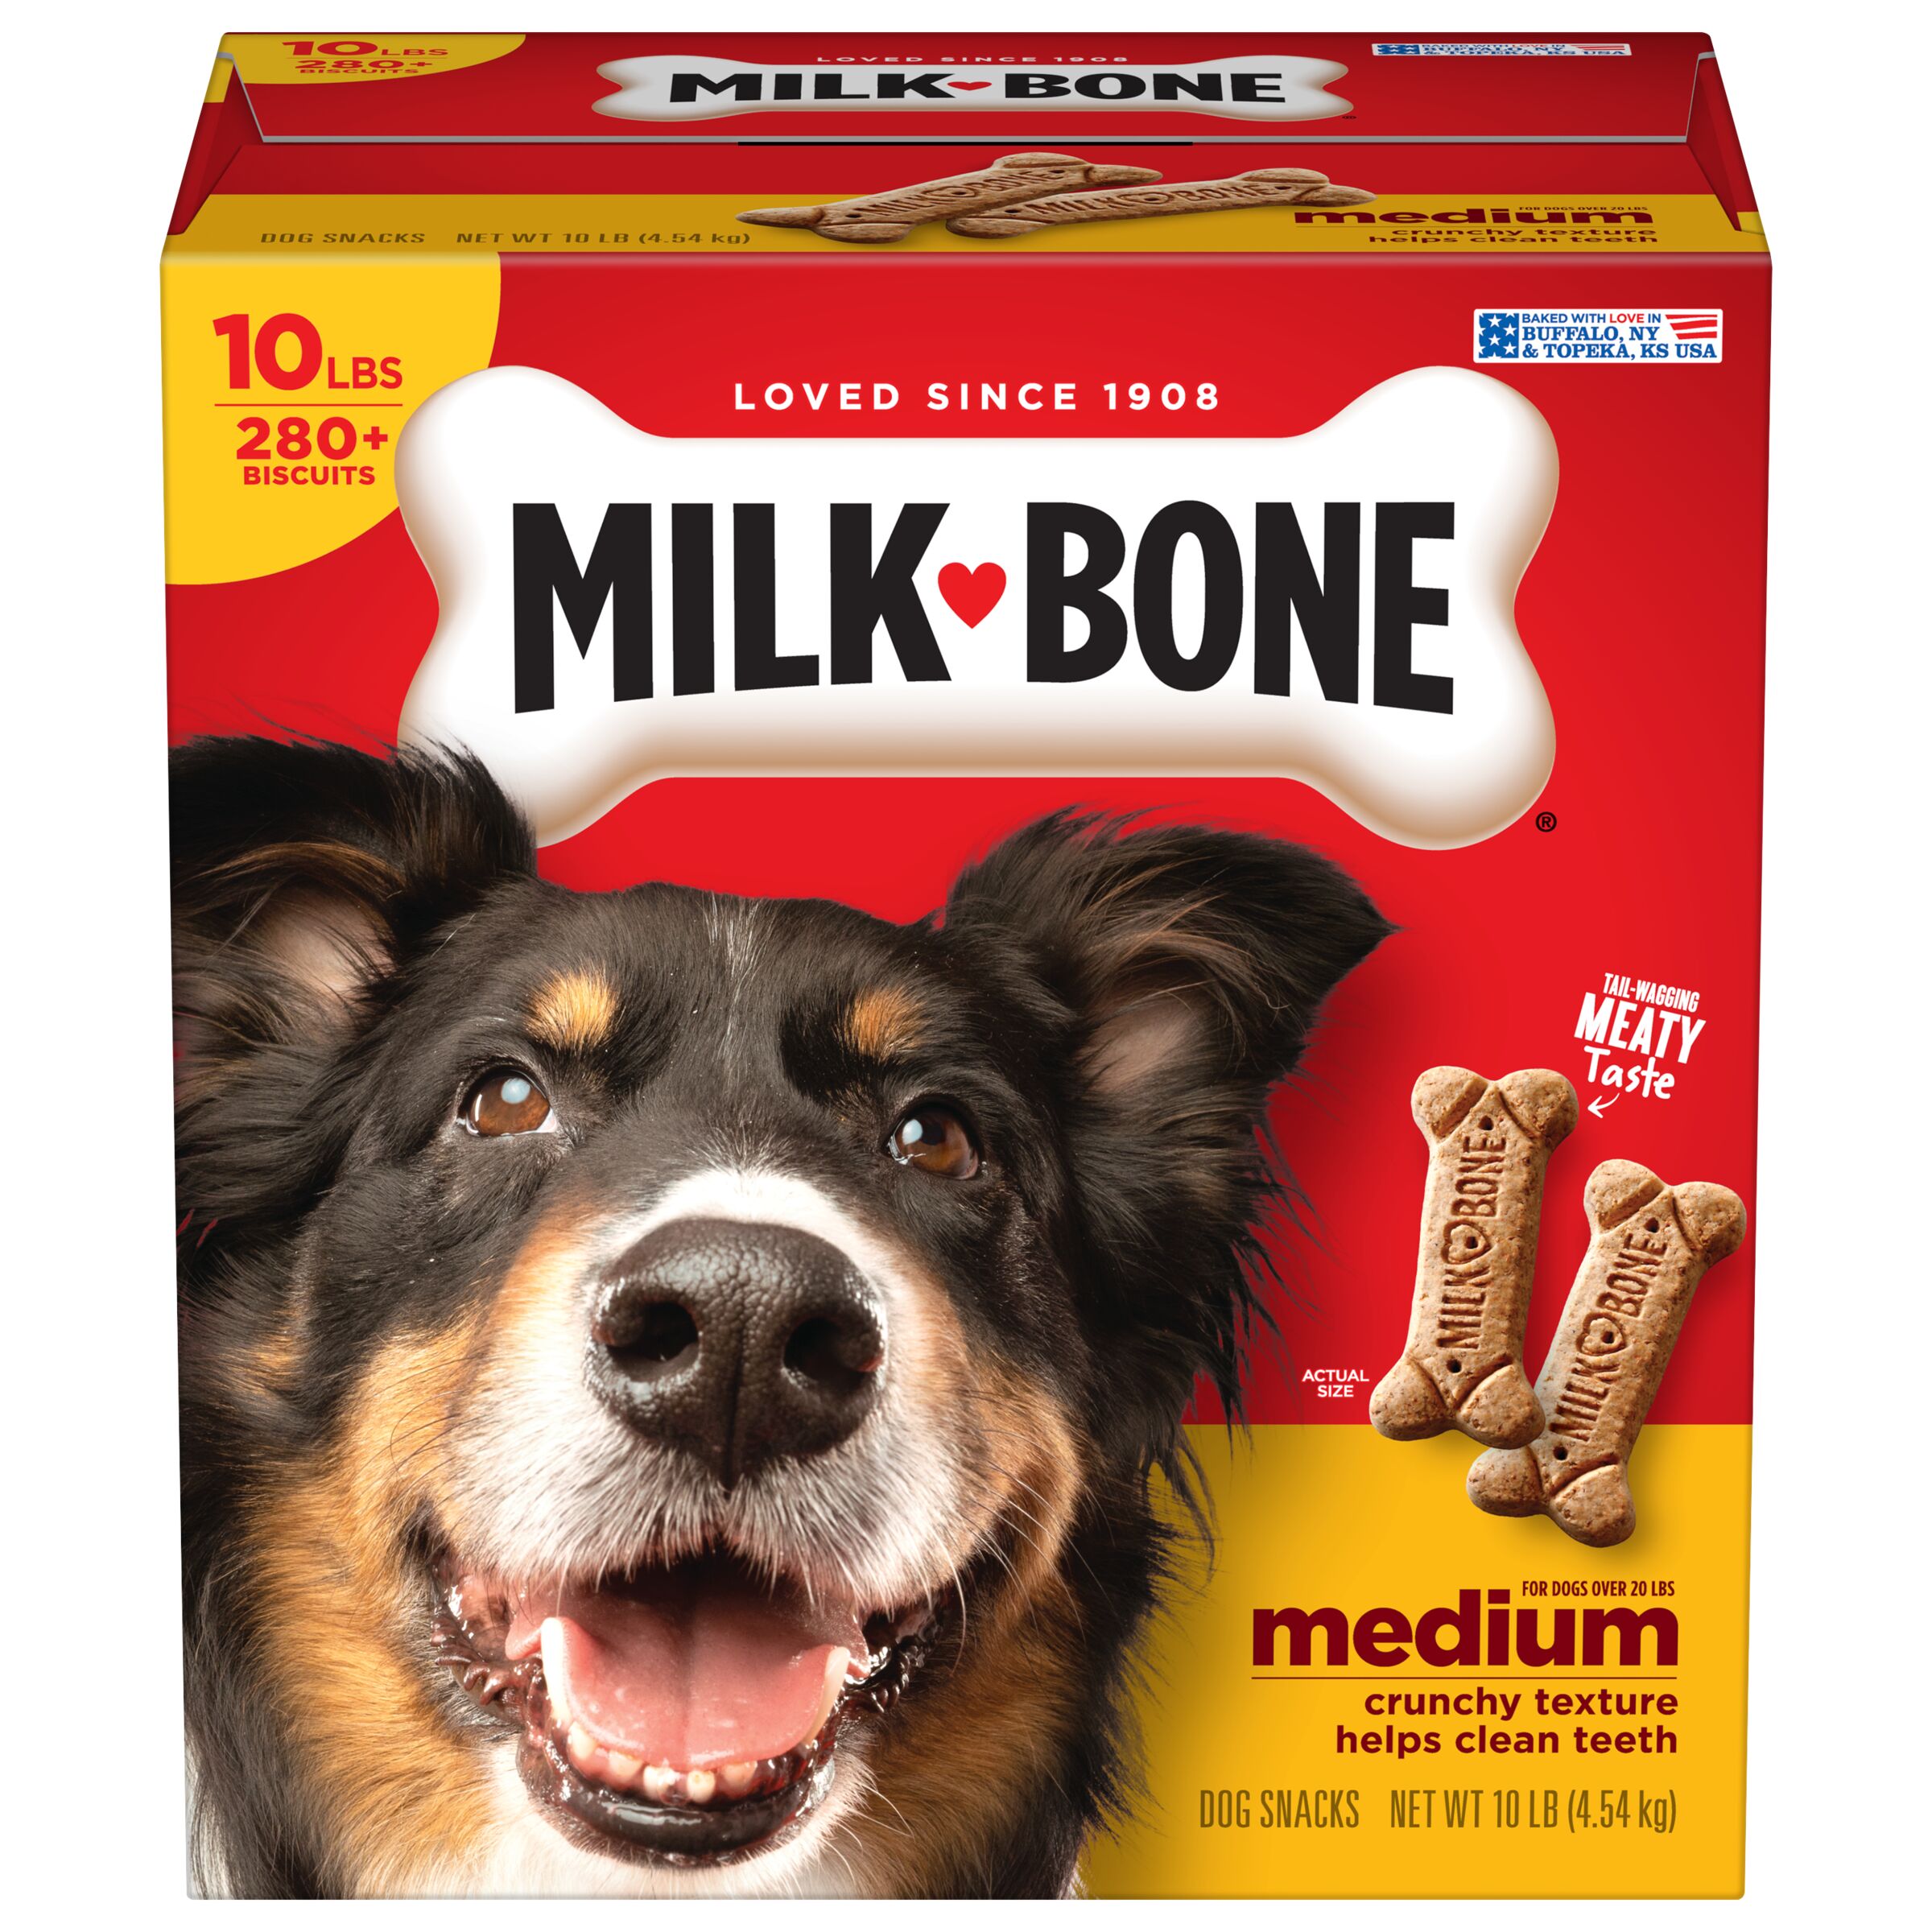 Milk-Bone Original Dog Biscuits, Medium Crunchy Dog Treats, 10 lbs. - image 1 of 10